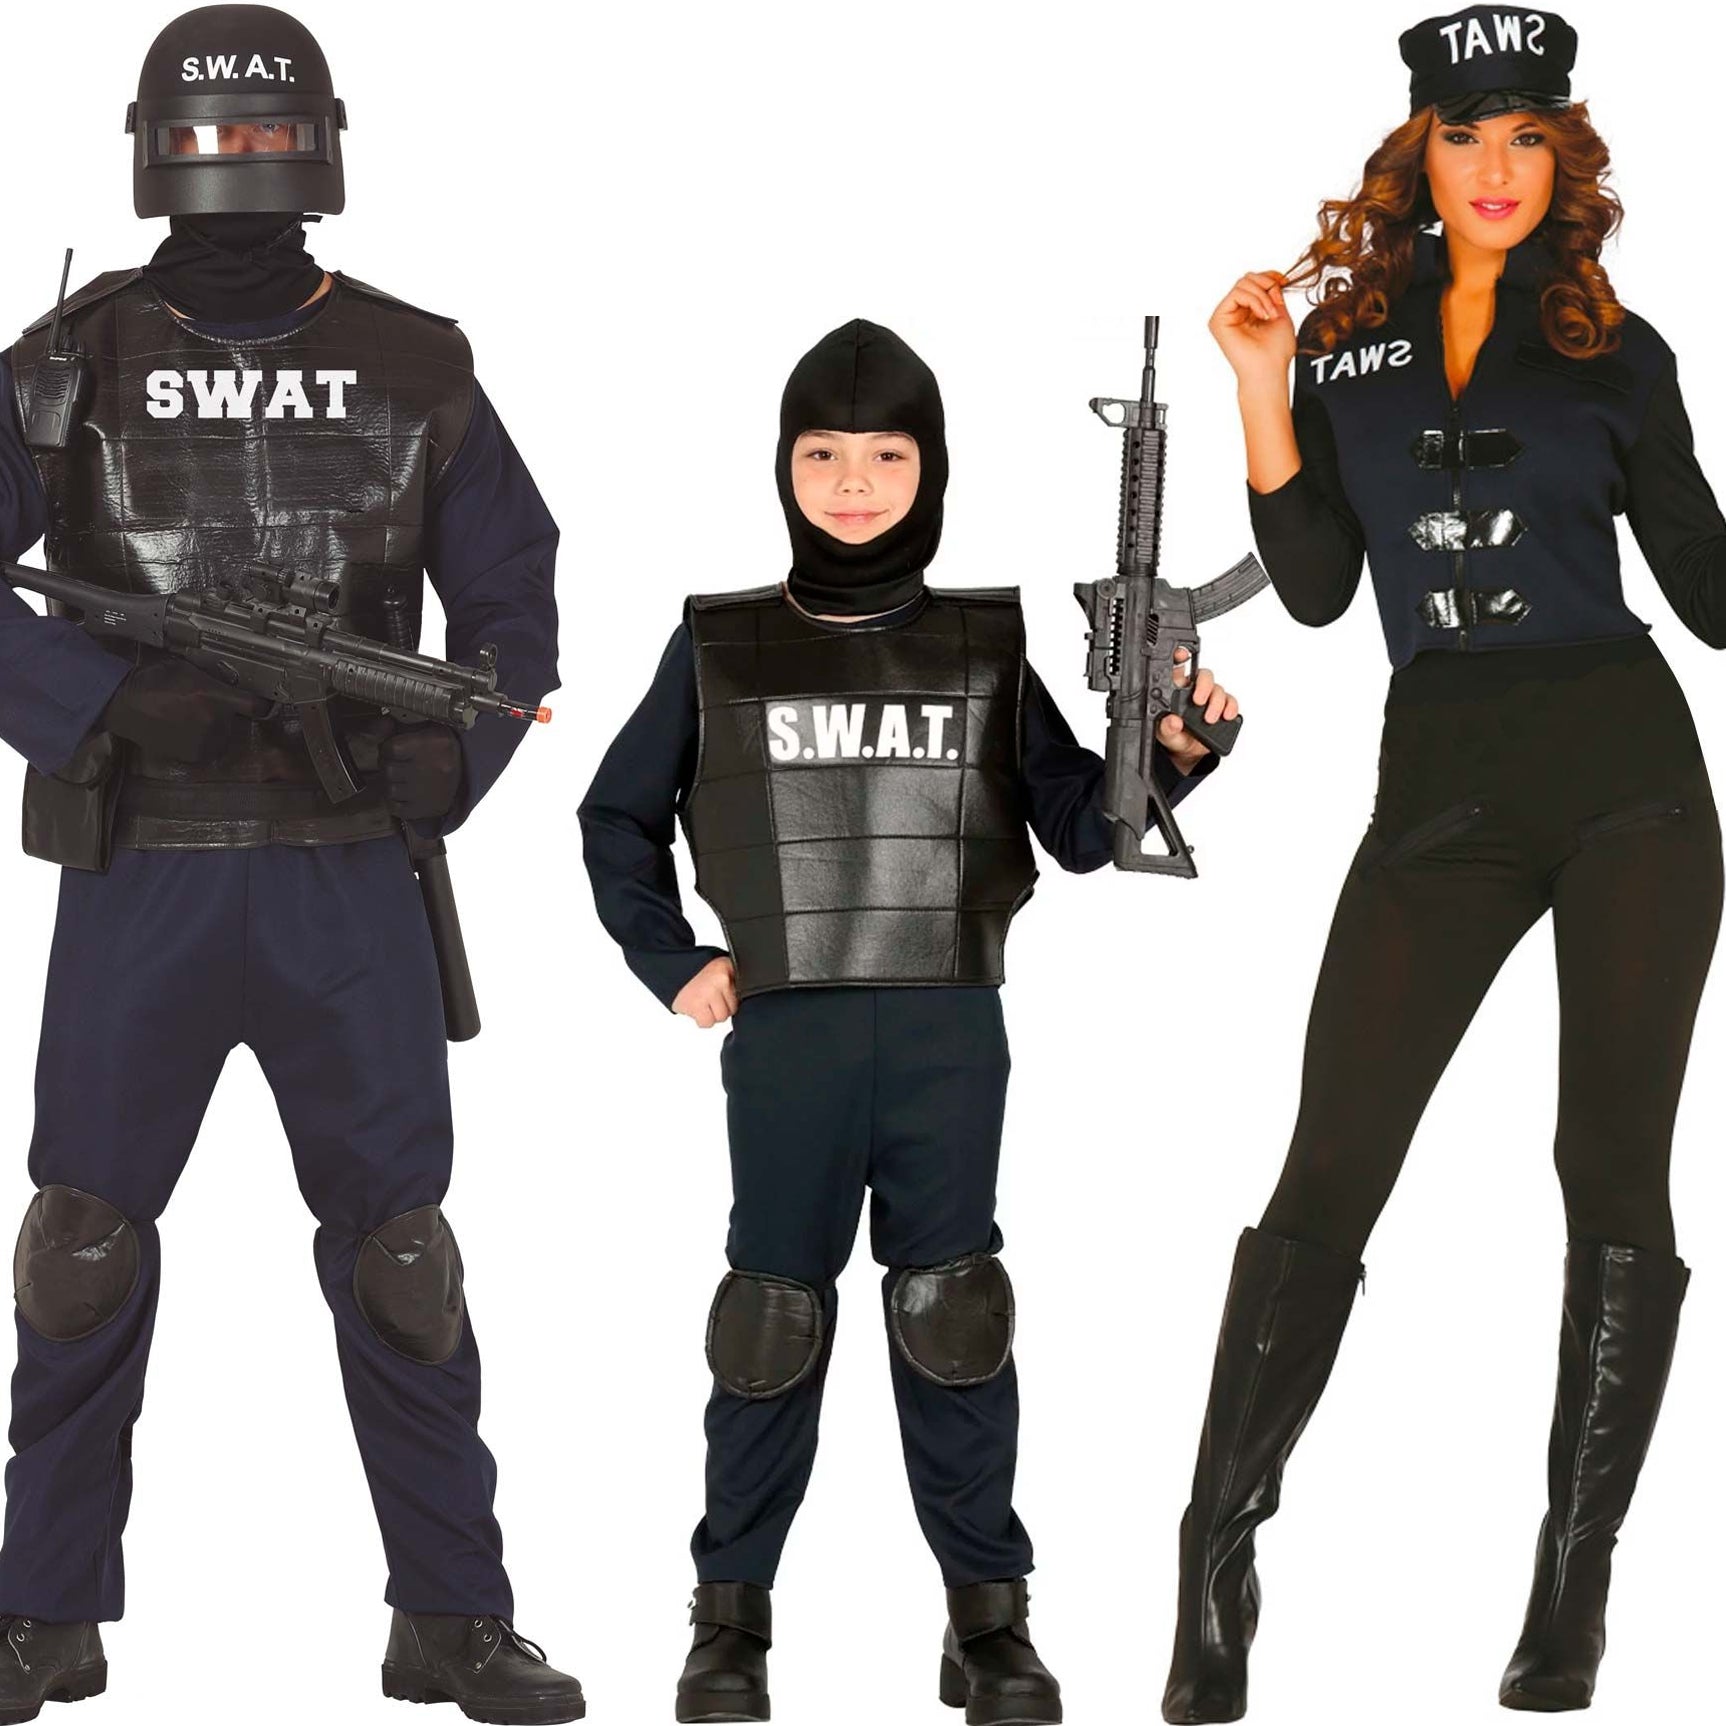 Comprar online Disfraces en grupo de Swats